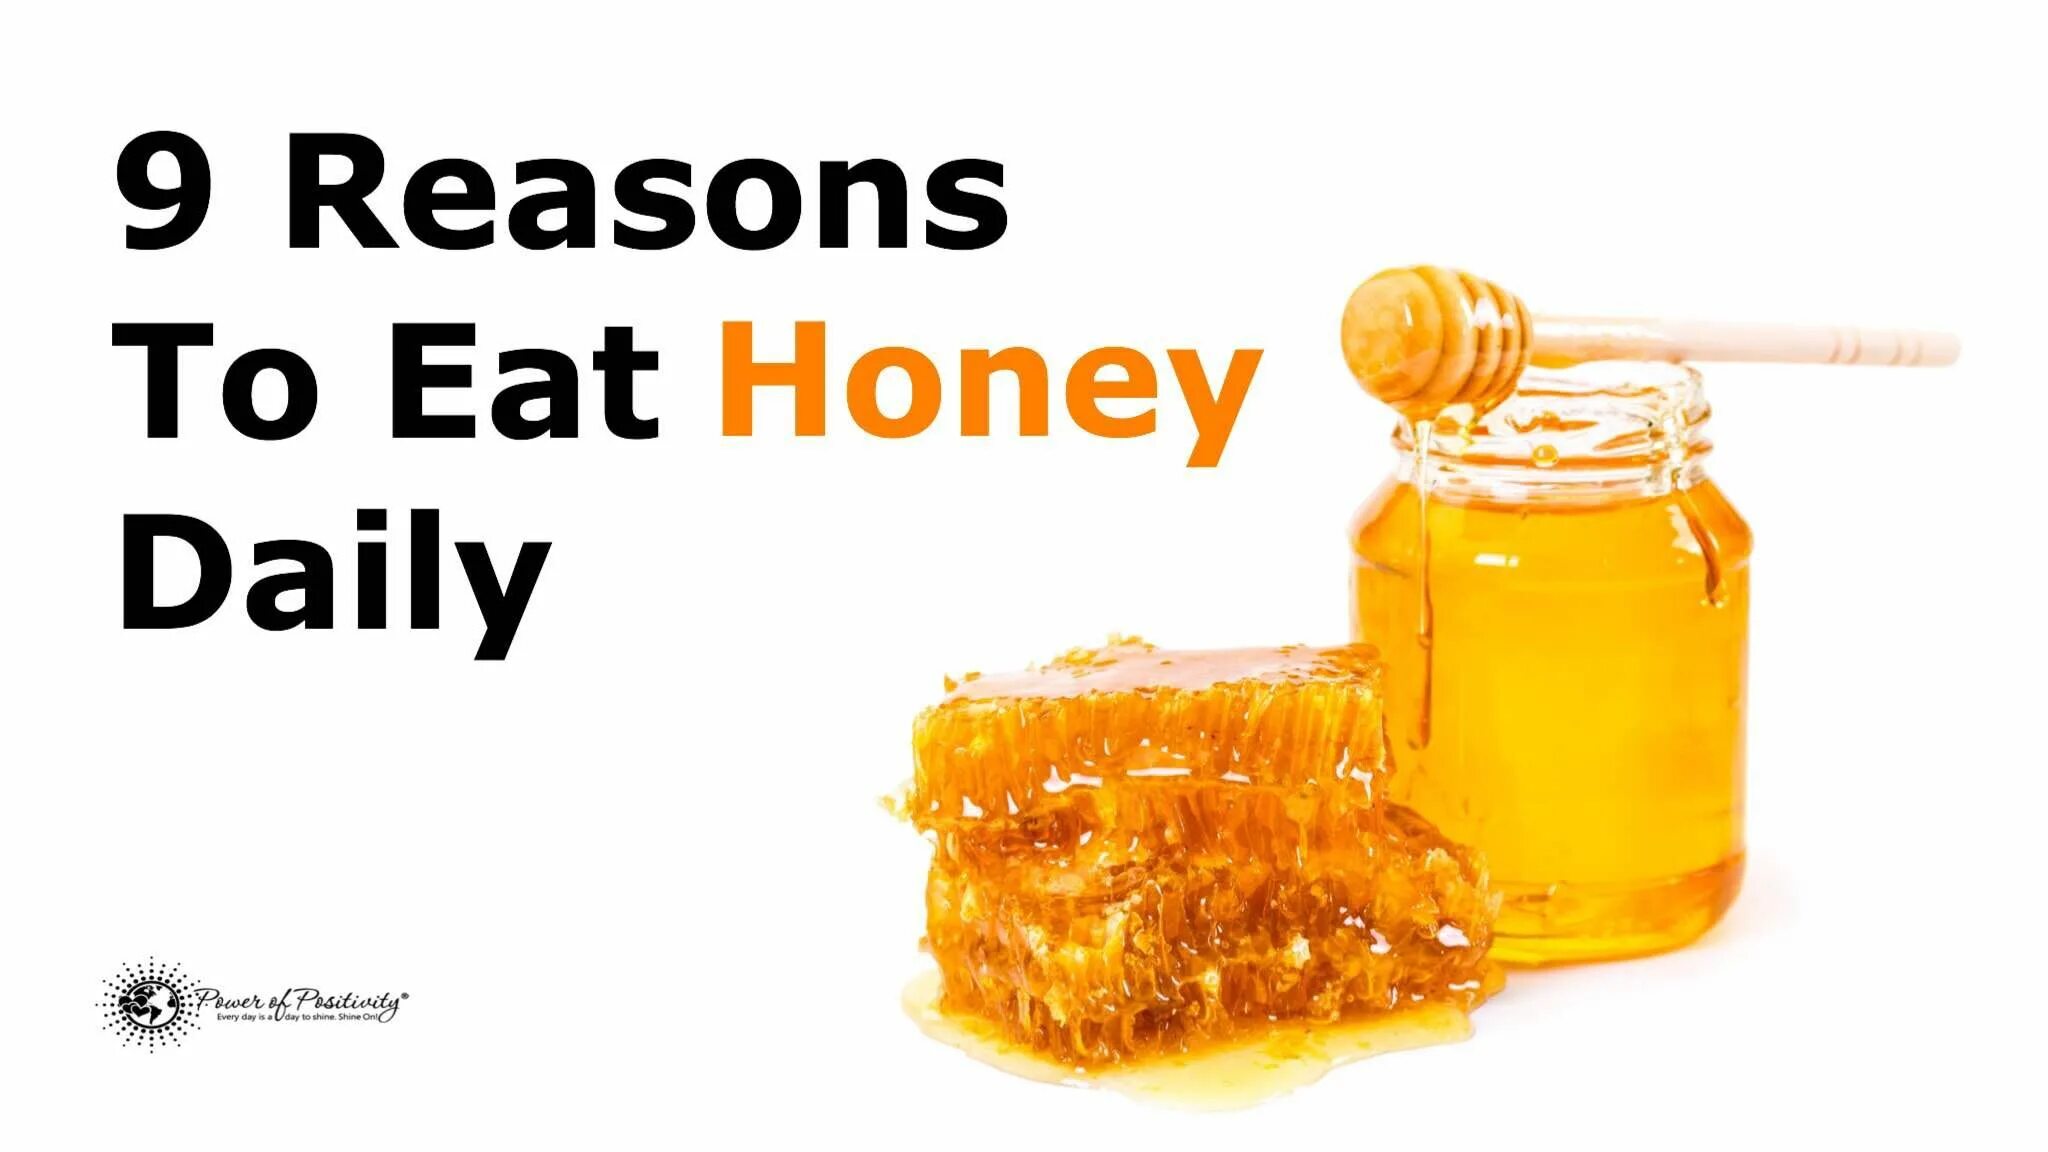 Much honey. Honey benefits. Too much Honey. Daily reasons. Смайлики из пинтереста Honey.